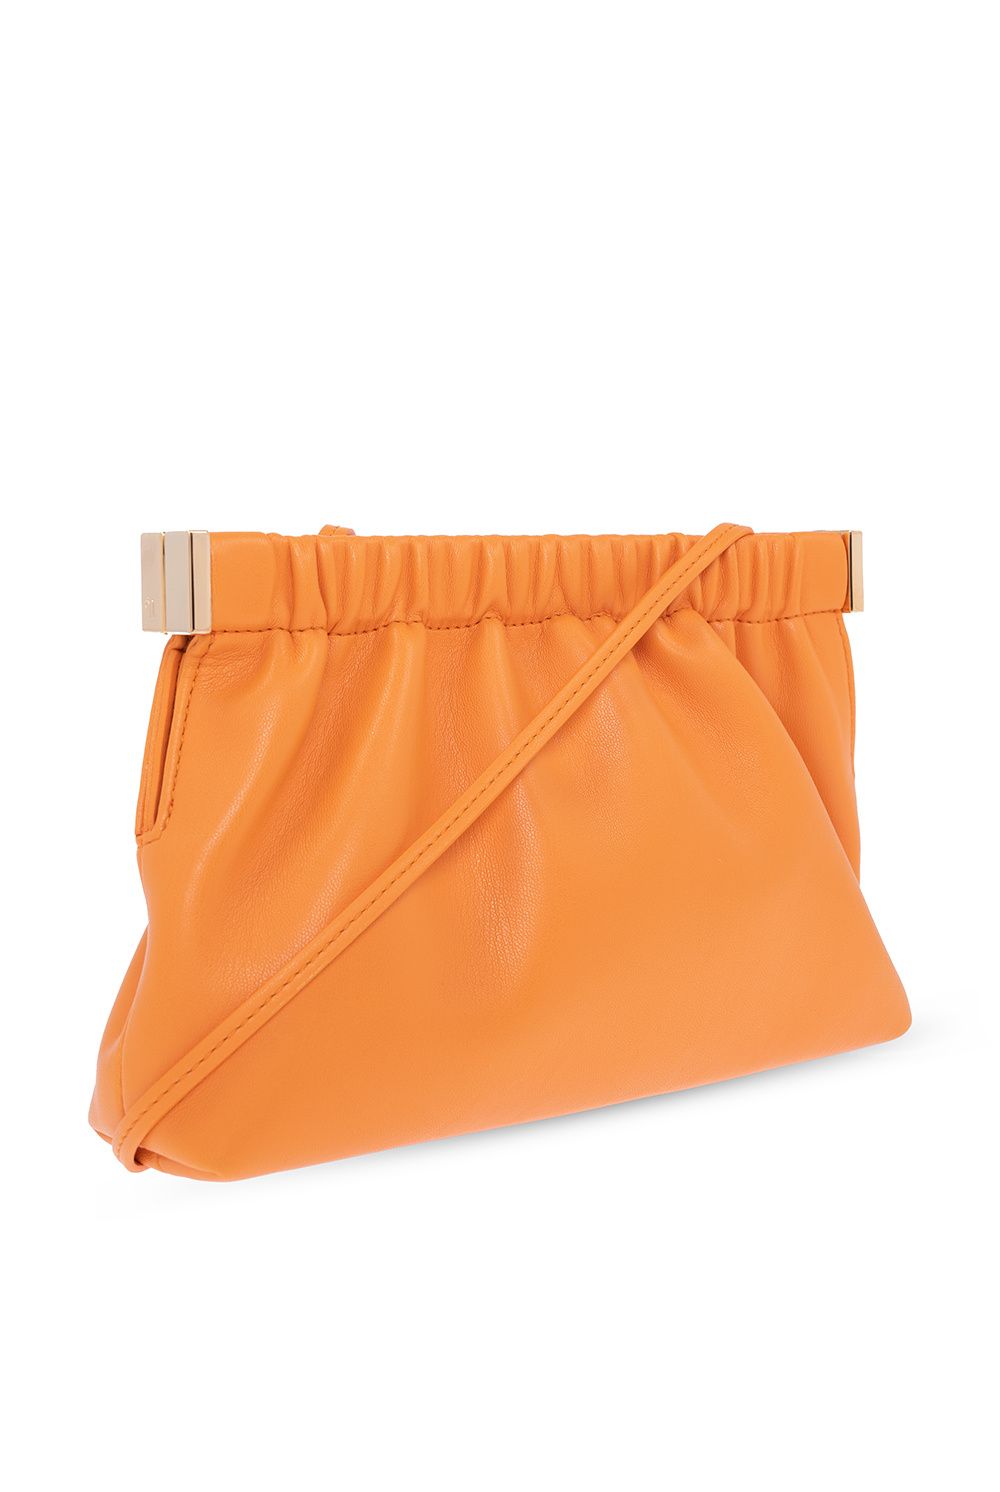 Nanushka ‘Clutch Mini’ shoulder bag